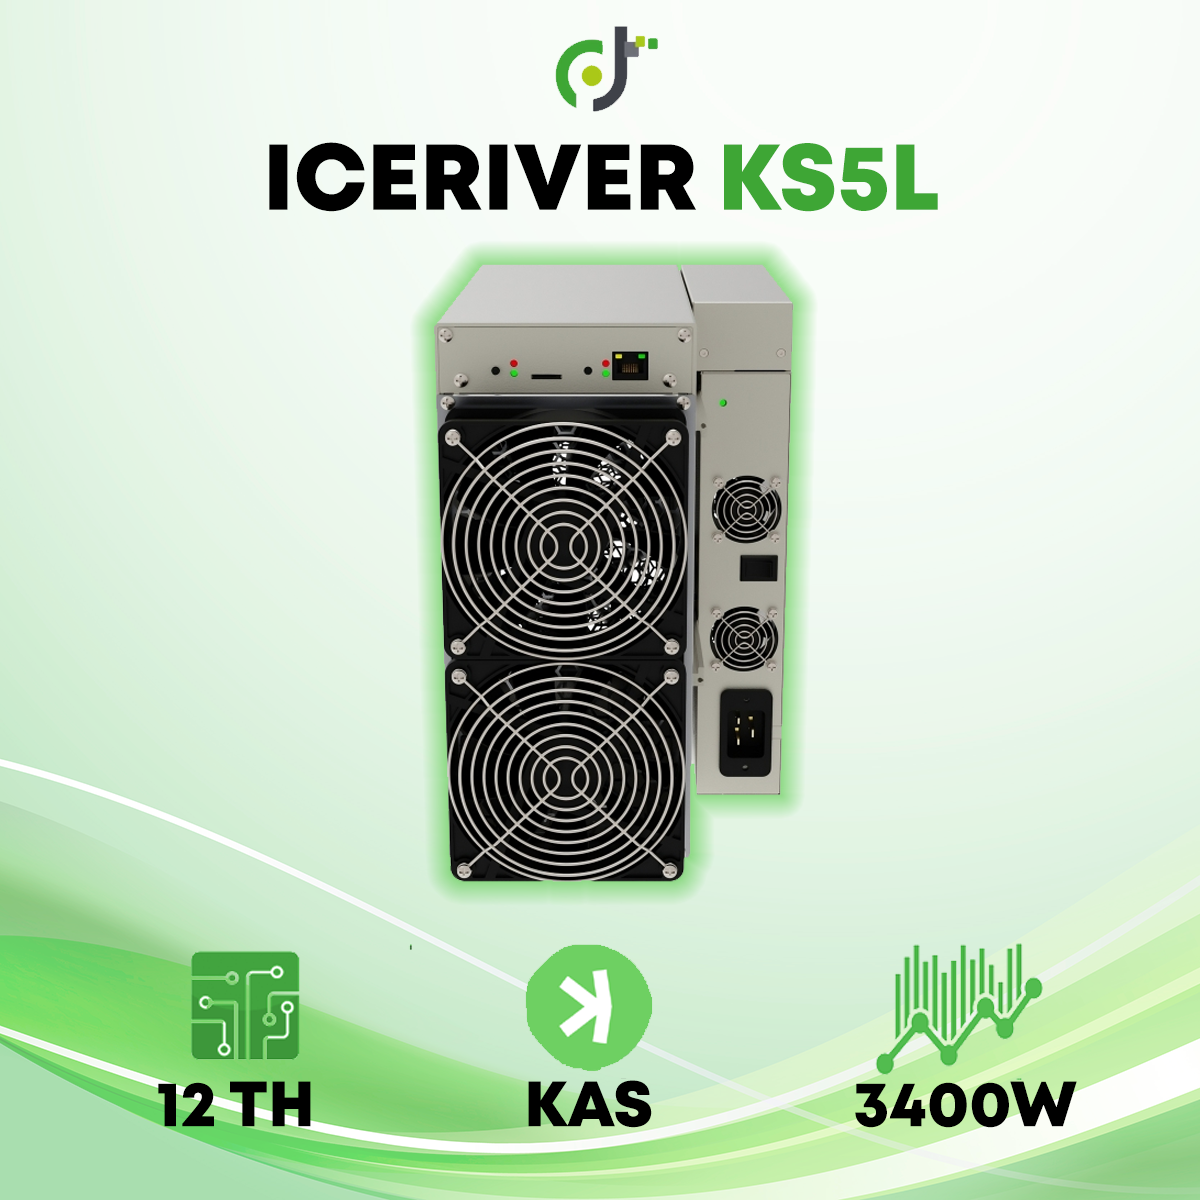 Iceriver KS5L (12TH) KAS Crypto ASIC Miner - DCT ASIC Miner & Hosting Komponentko mining rudarjenja kovanca KASPA $ KAS notesniki.si ks3m ks0 pro